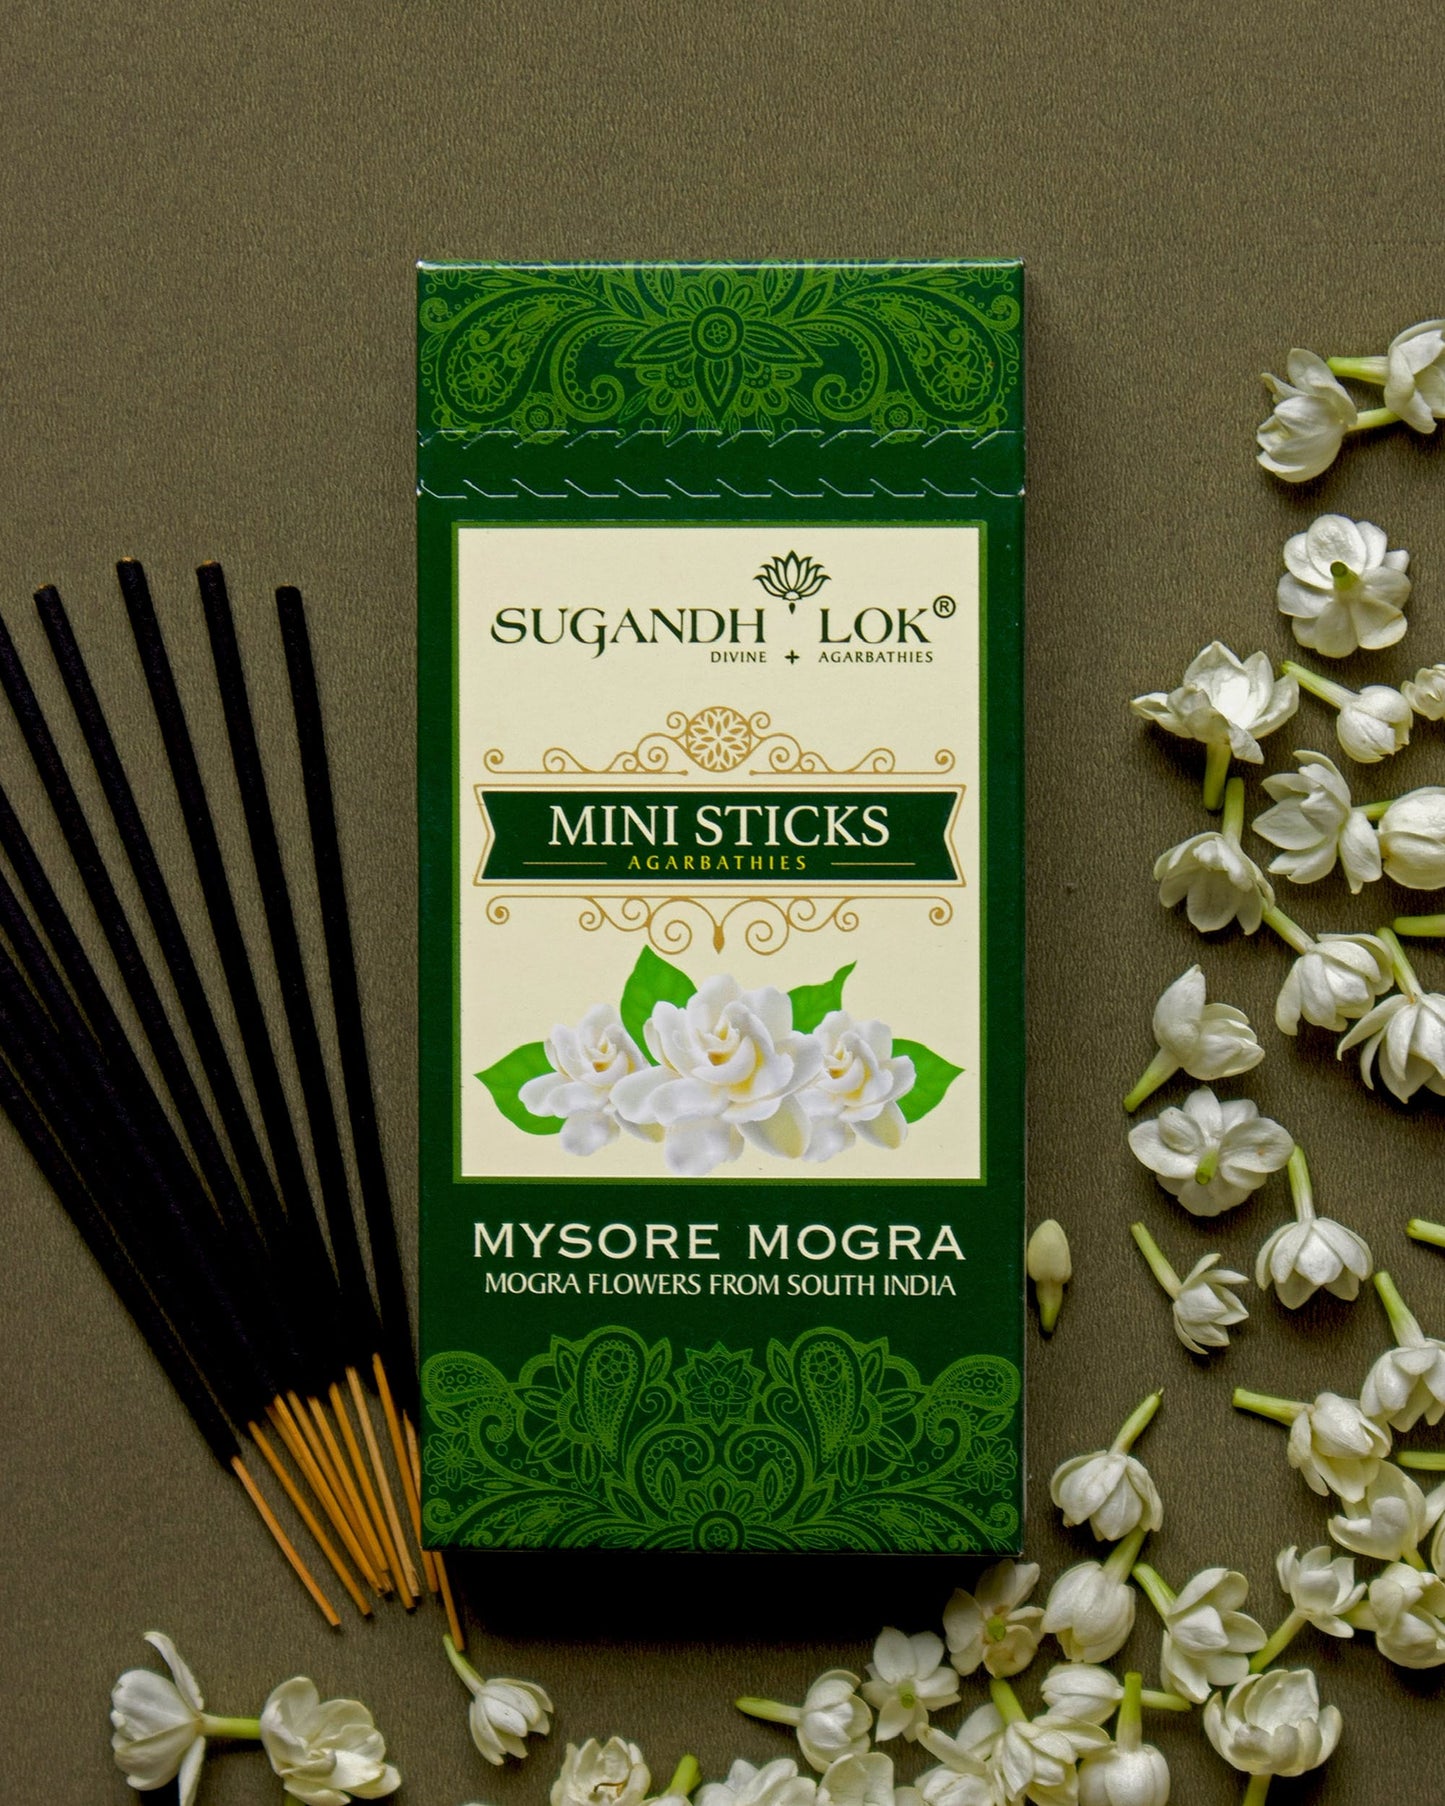 Mysore Mogra Agarbatti Mini Sticks Box surrounded by mogra flowers